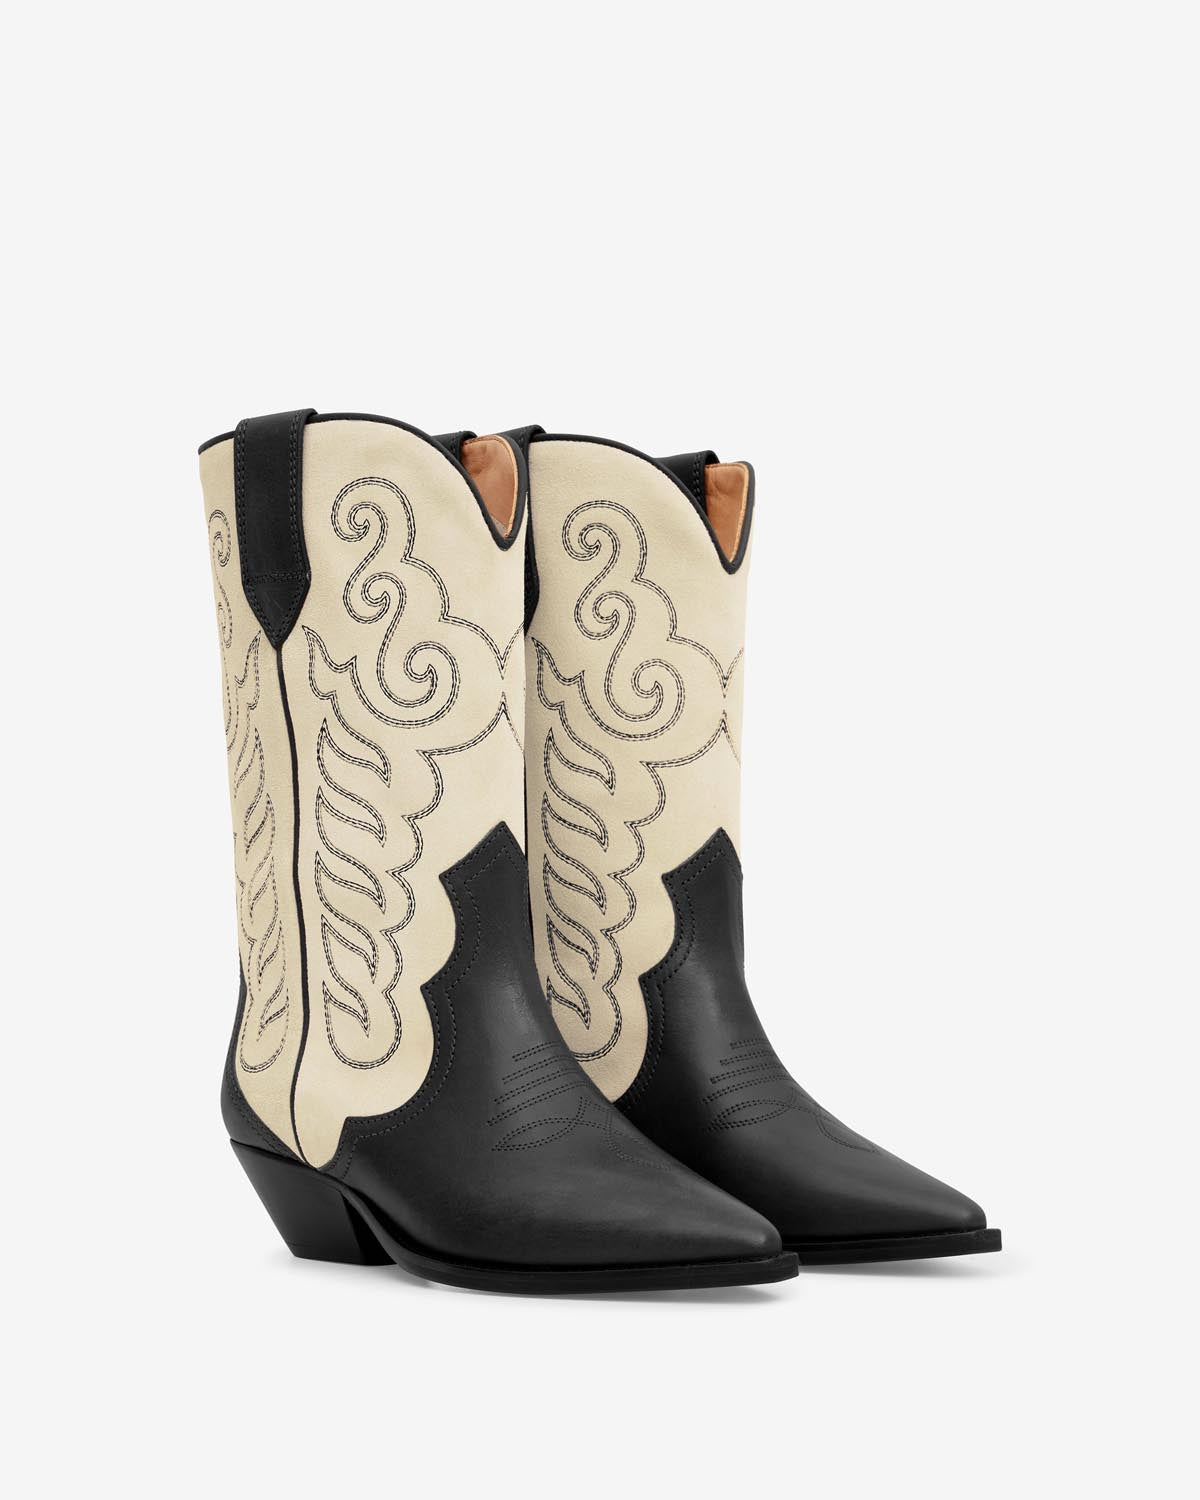 Duerto cowboy boots Woman Black and ecru 3